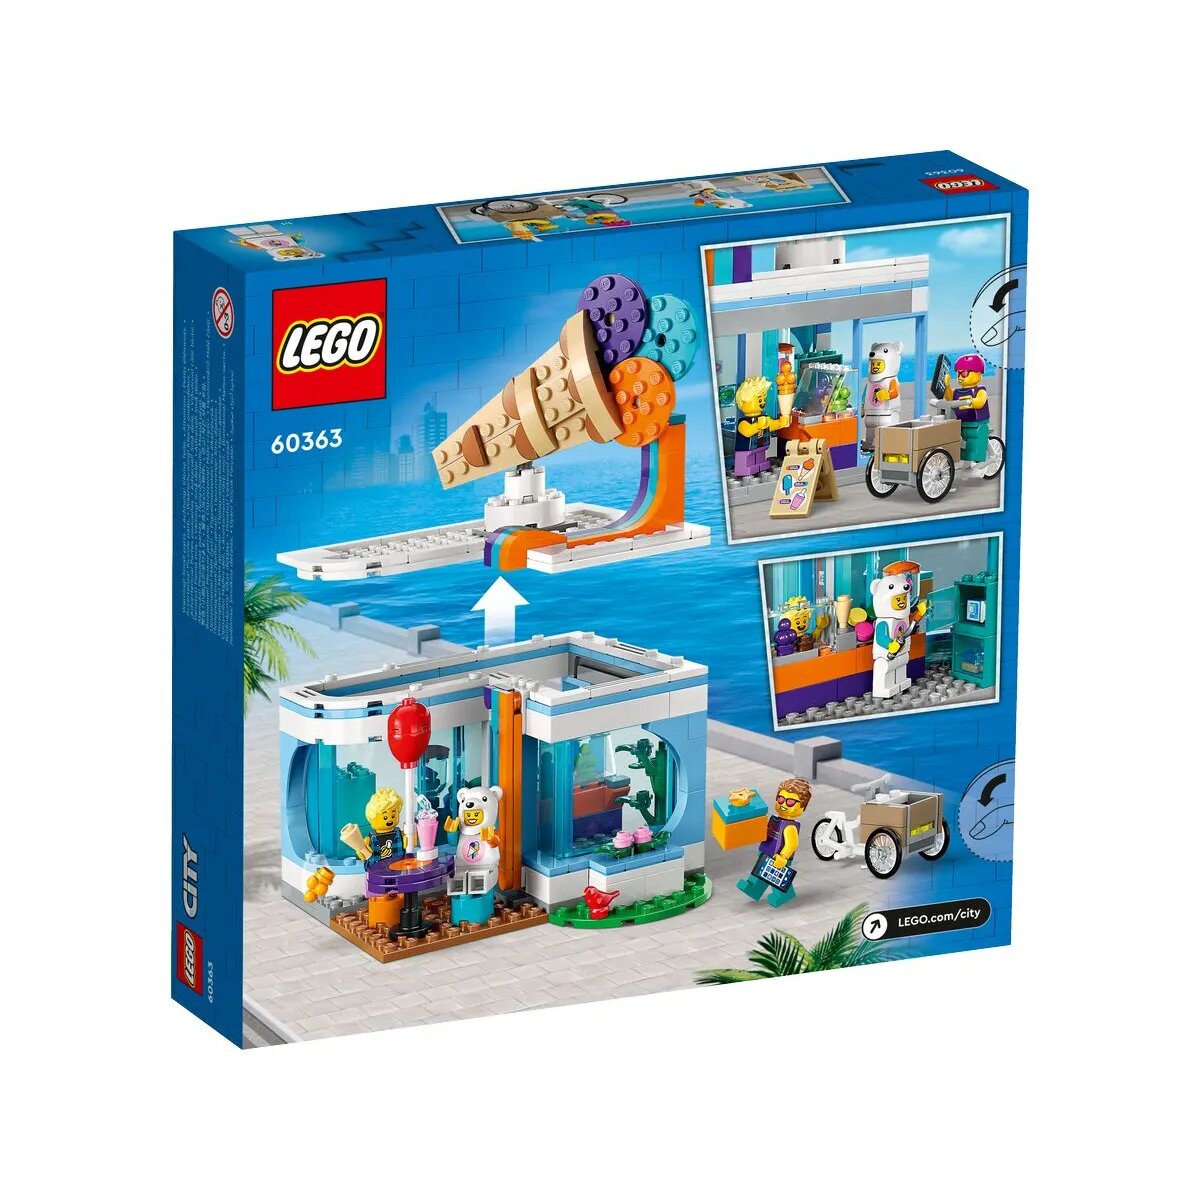 LEGO® City Community 60363 Ice Cream Shop